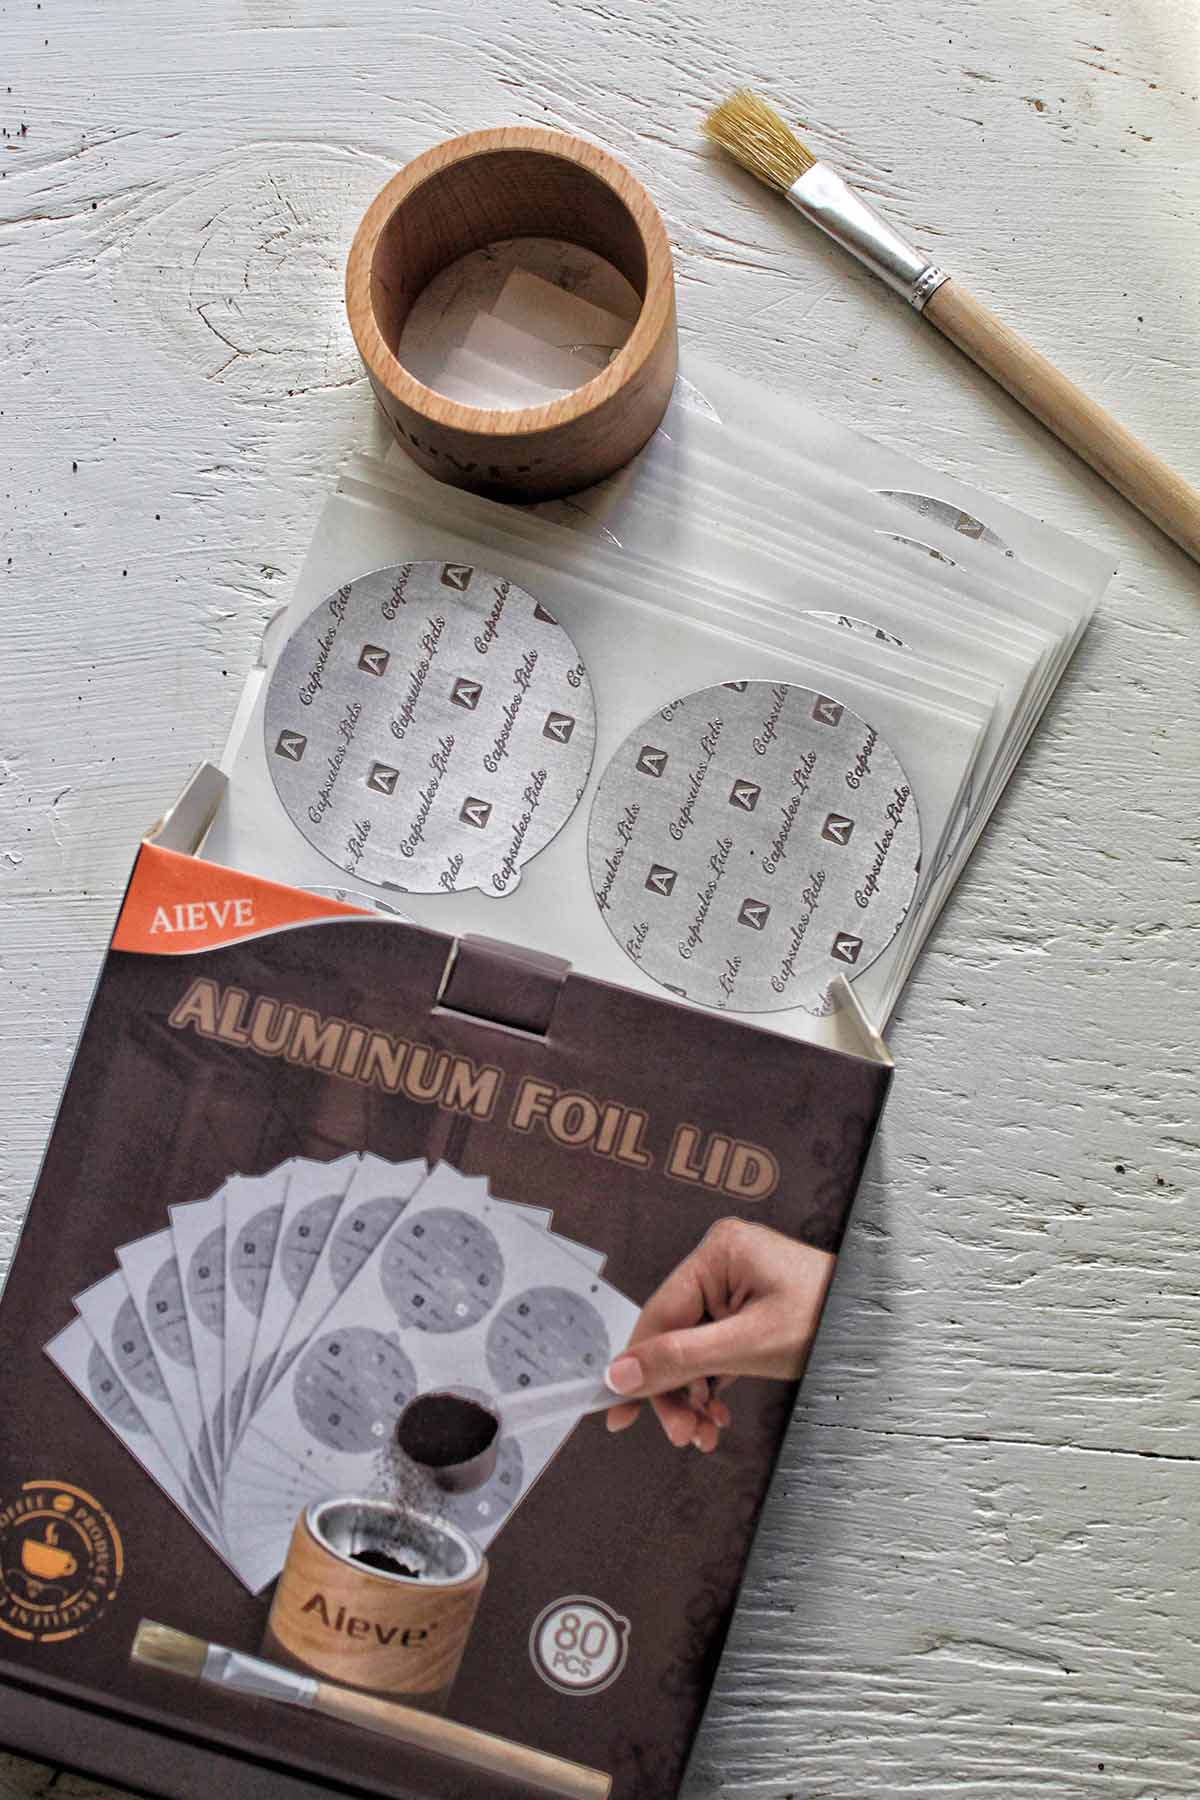 aluminum foil lid kit with a brush, wooden holder, and foil lids.